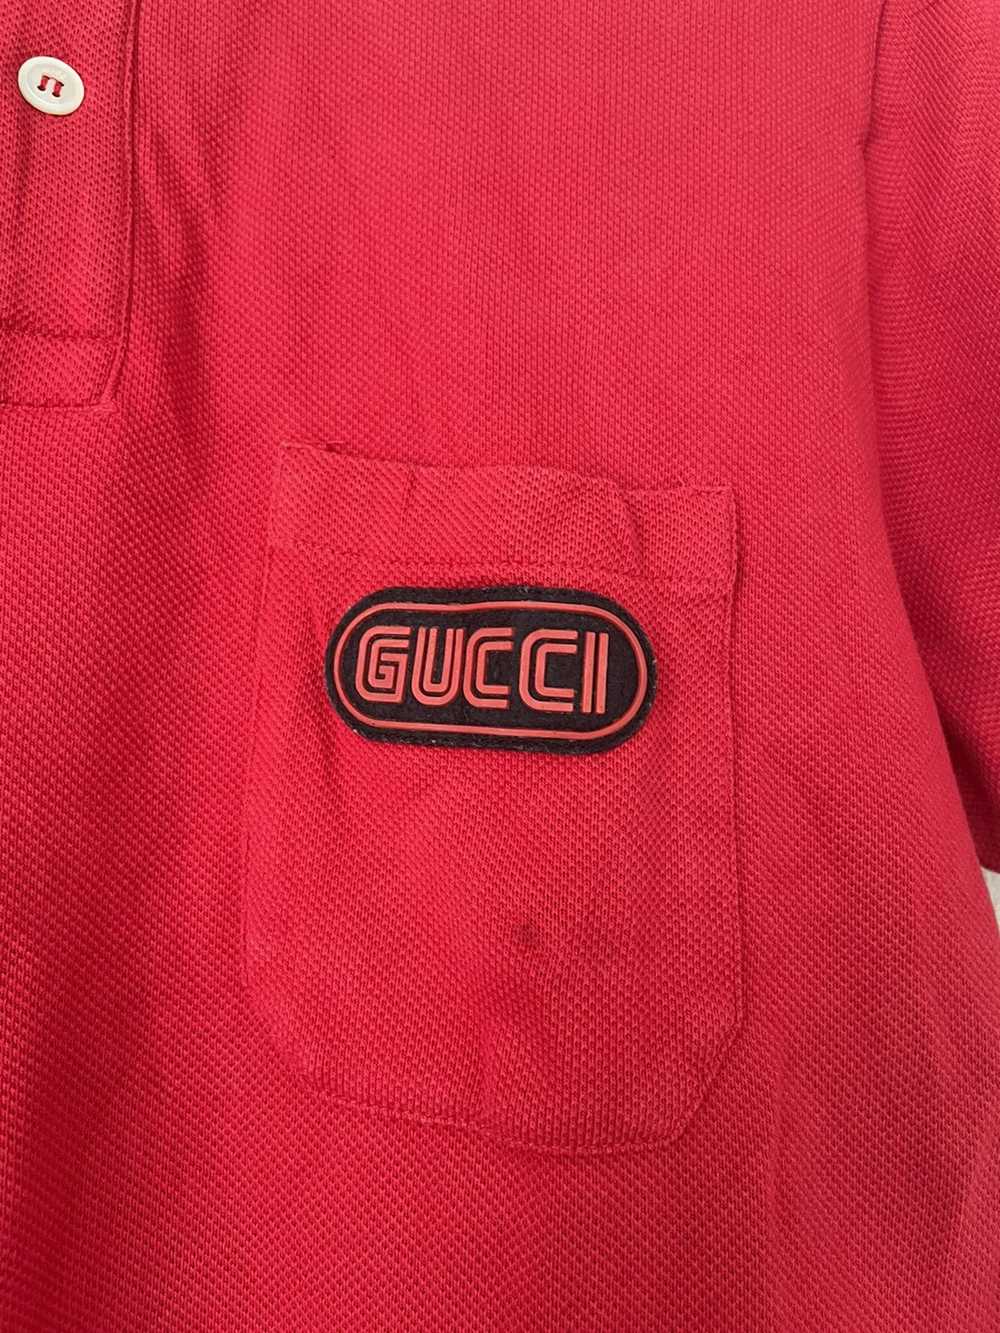 Gucci Red Rubber Logo Polo - image 2